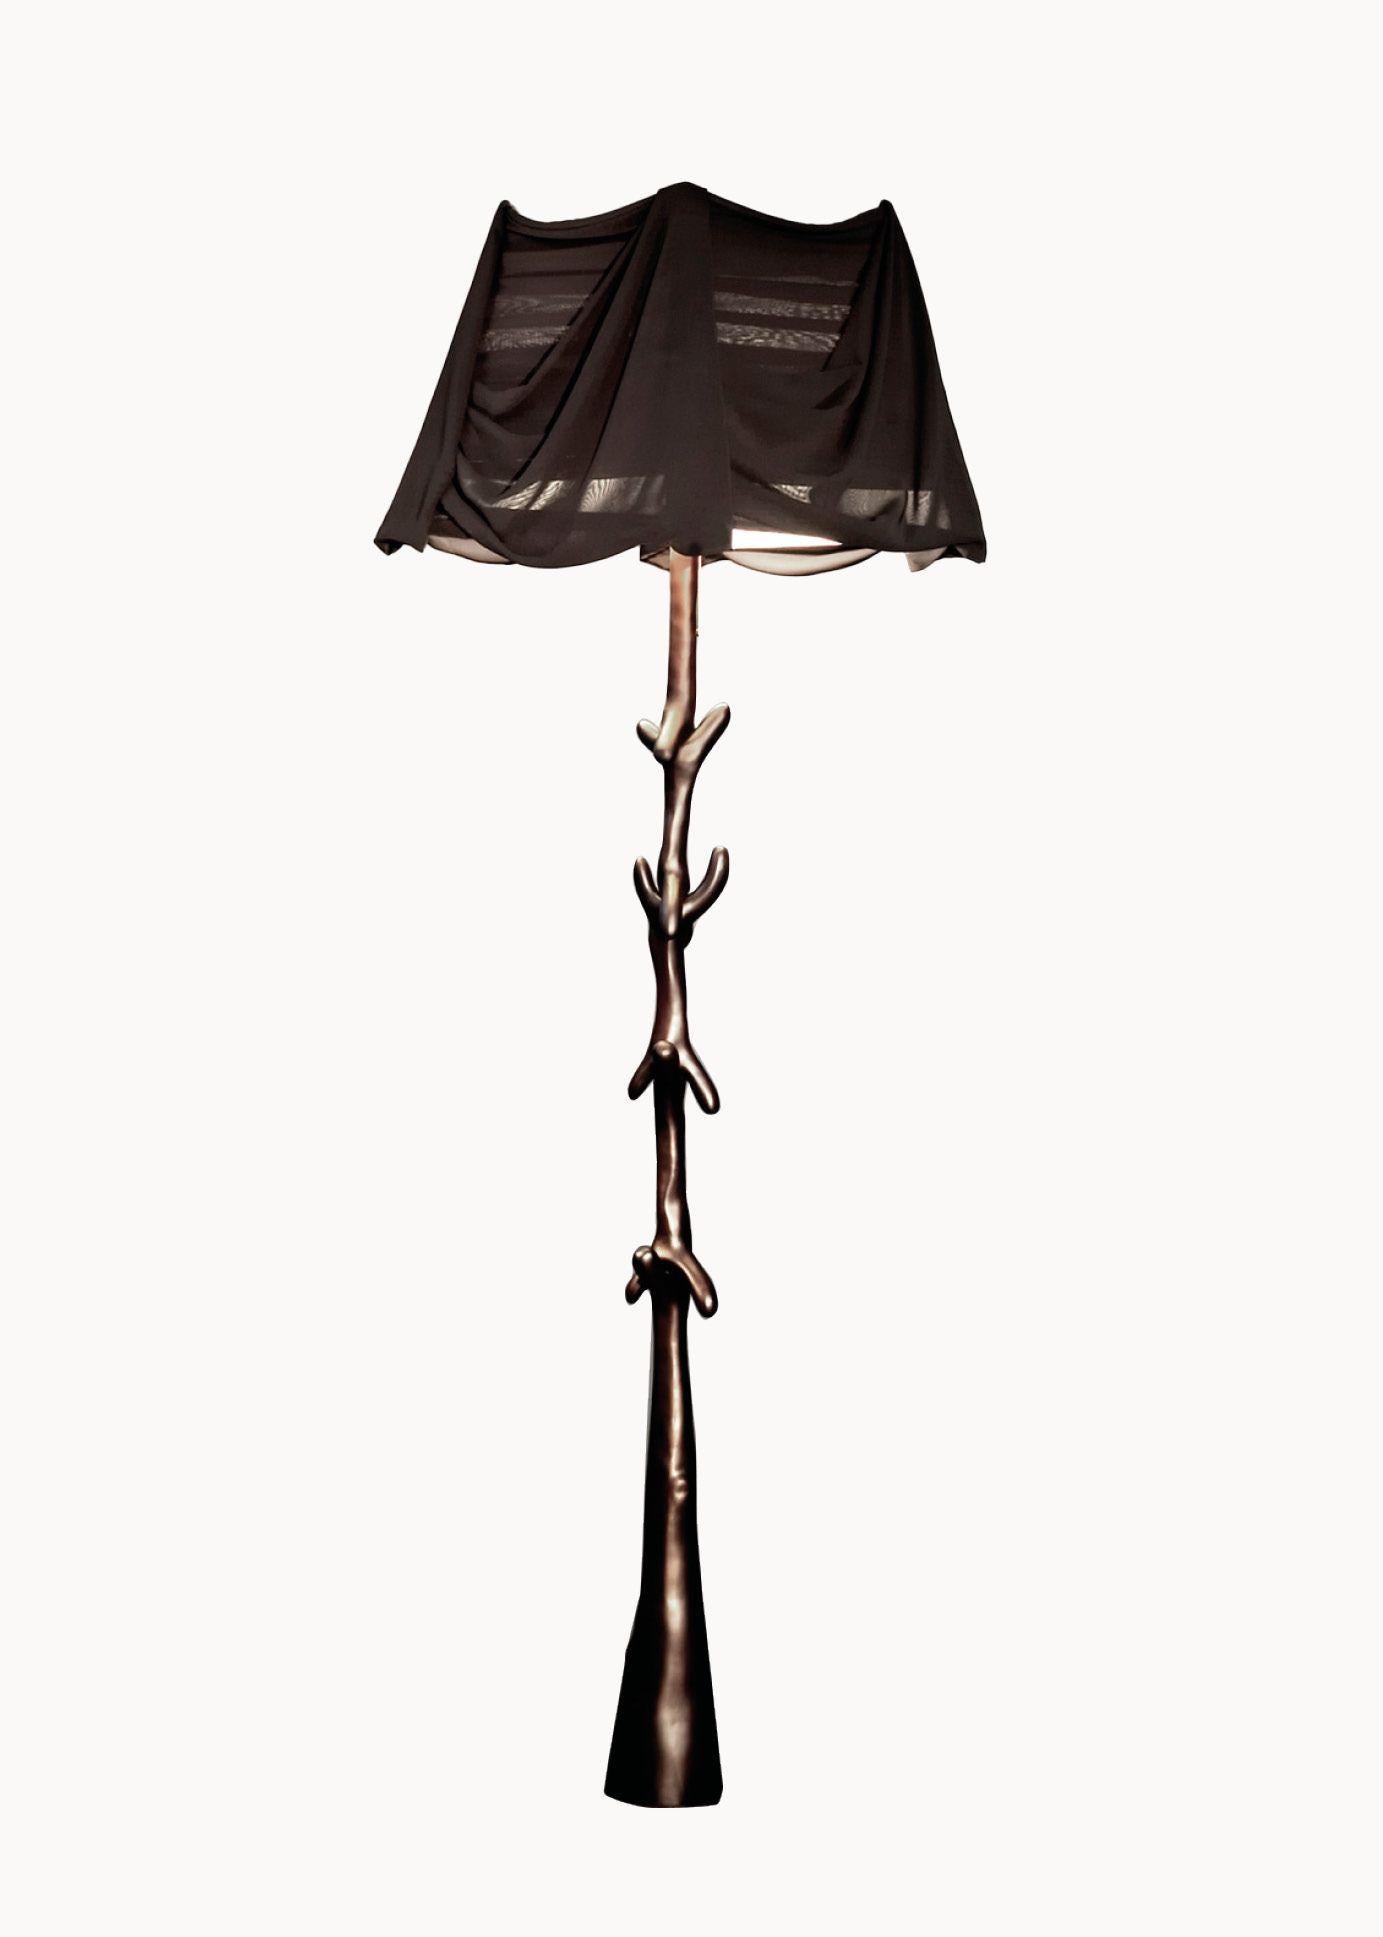 Mid-Century Modern Salvador Dali Muletas Lamp Sculpture, Black Label Limited Edition by Bd For Sale